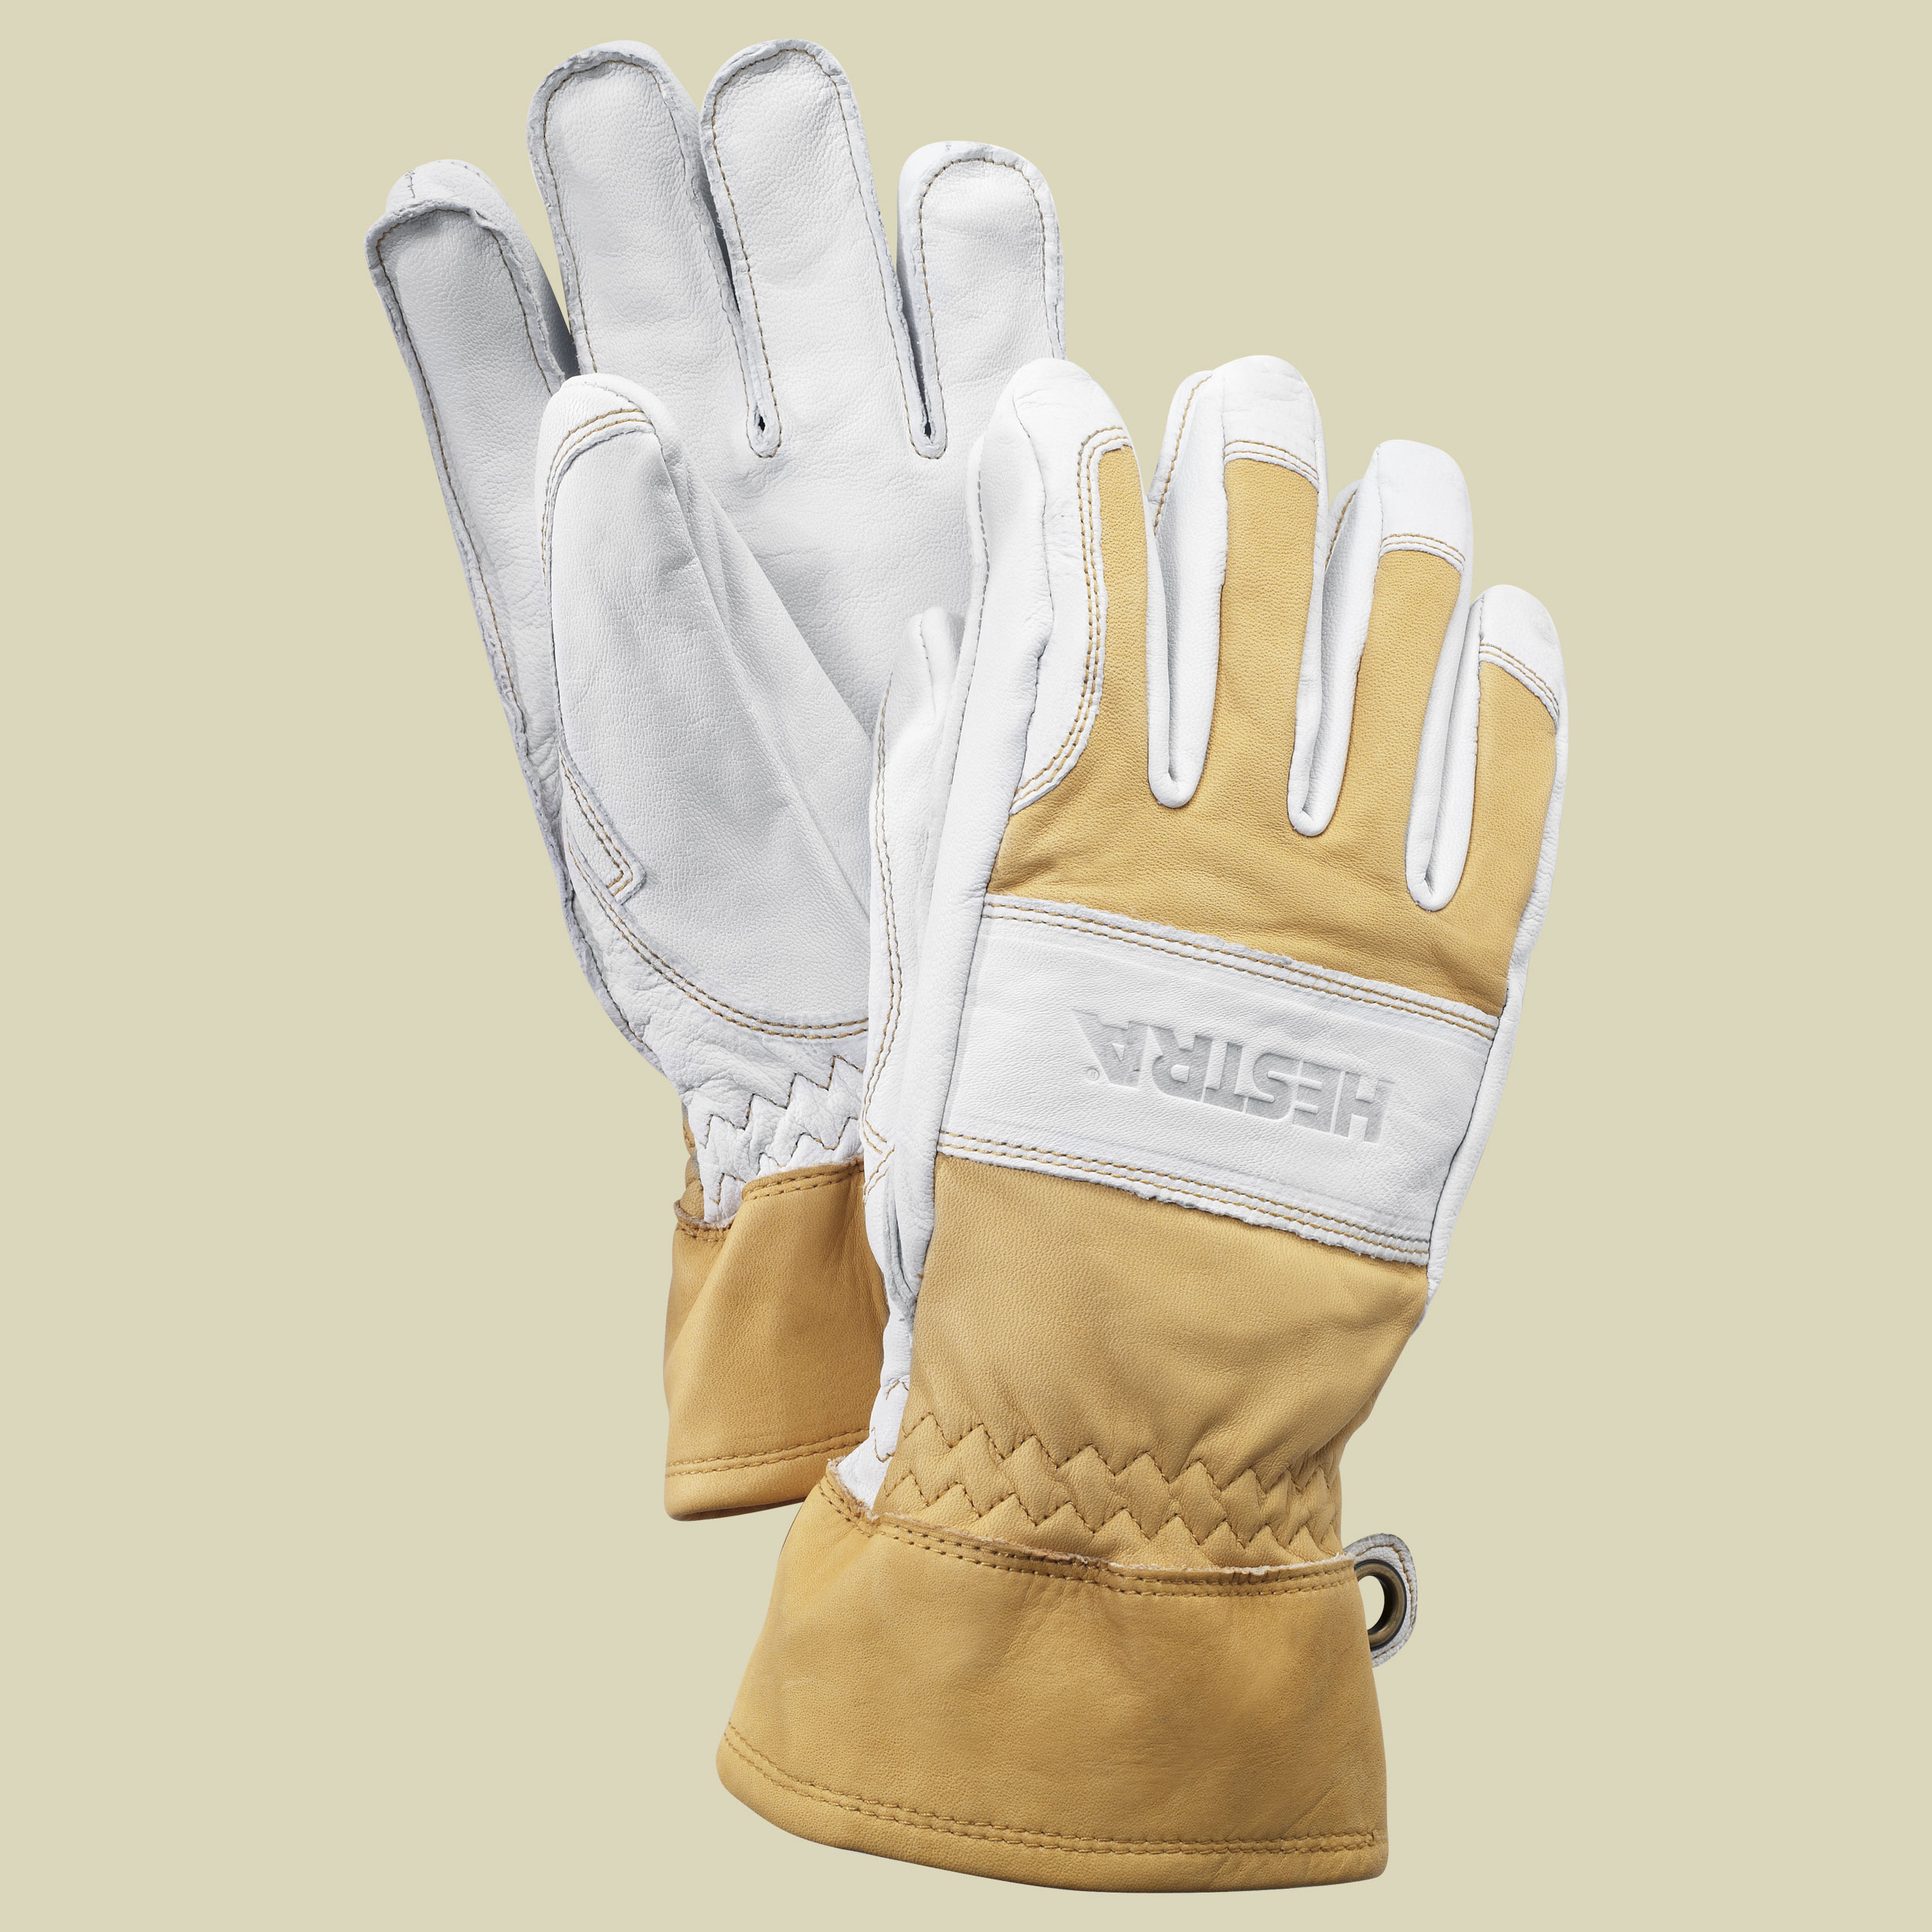 Fält Guide Glove Größe 7 Farbe natural yellow/offwhite